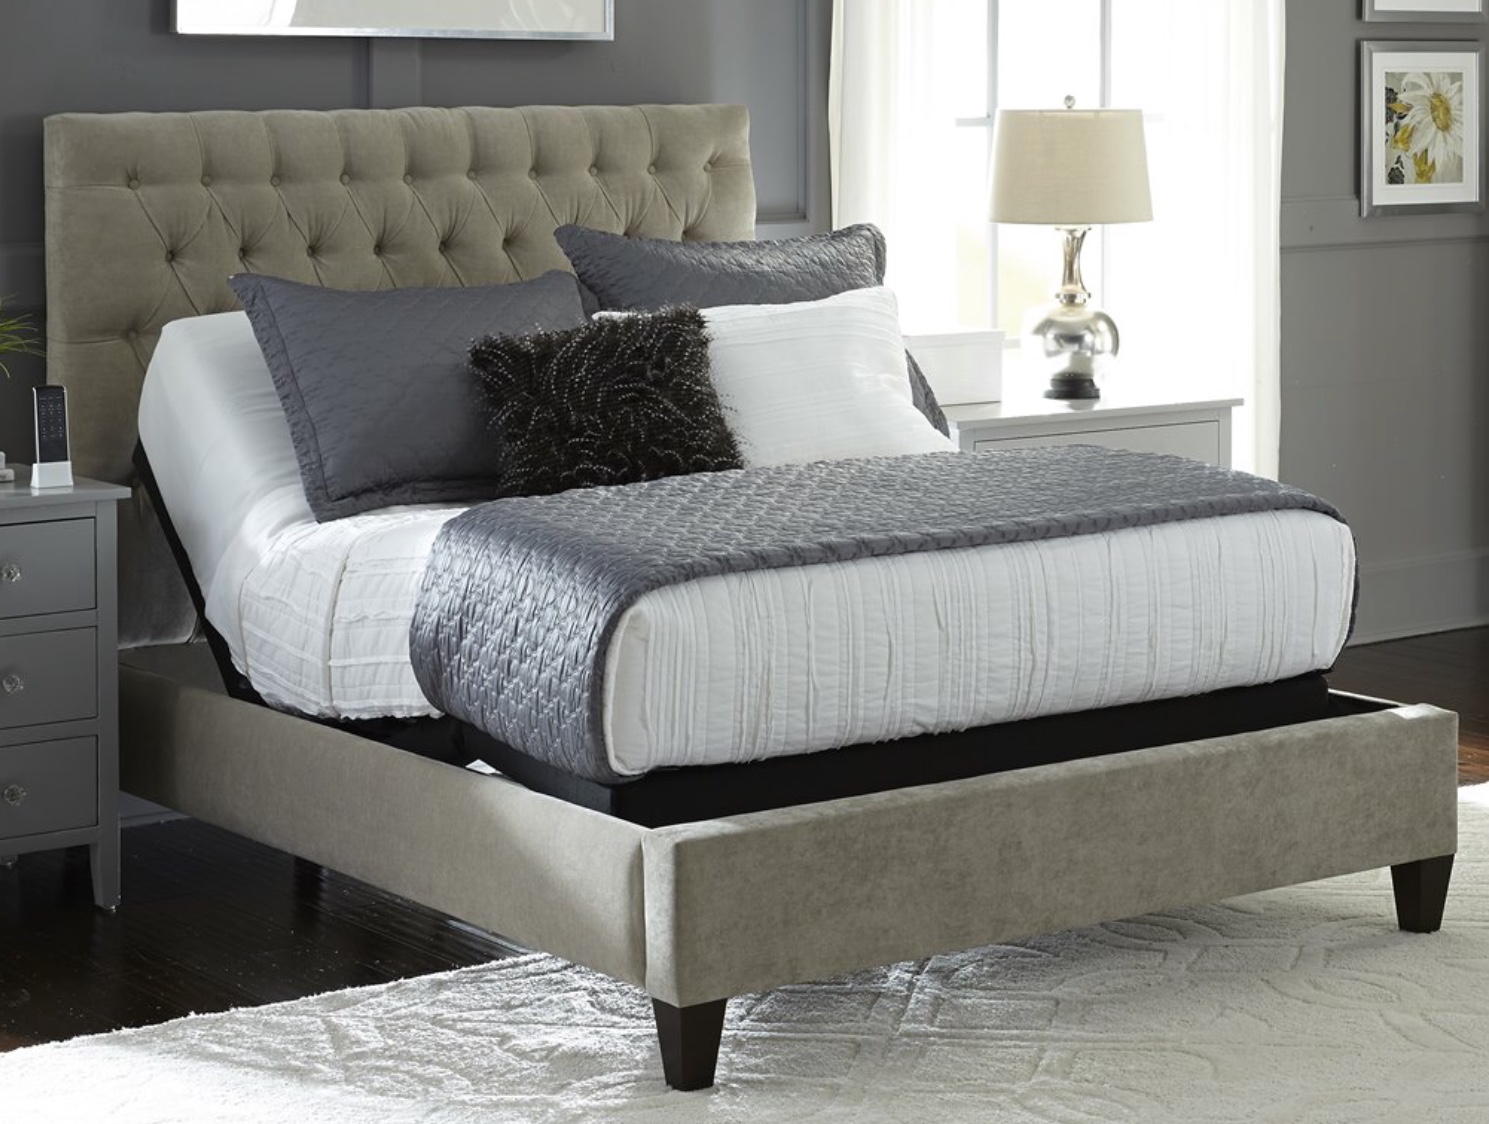 Can an adjustable bed fit inside any bed frame? Mississauga adjustable bed showroom 